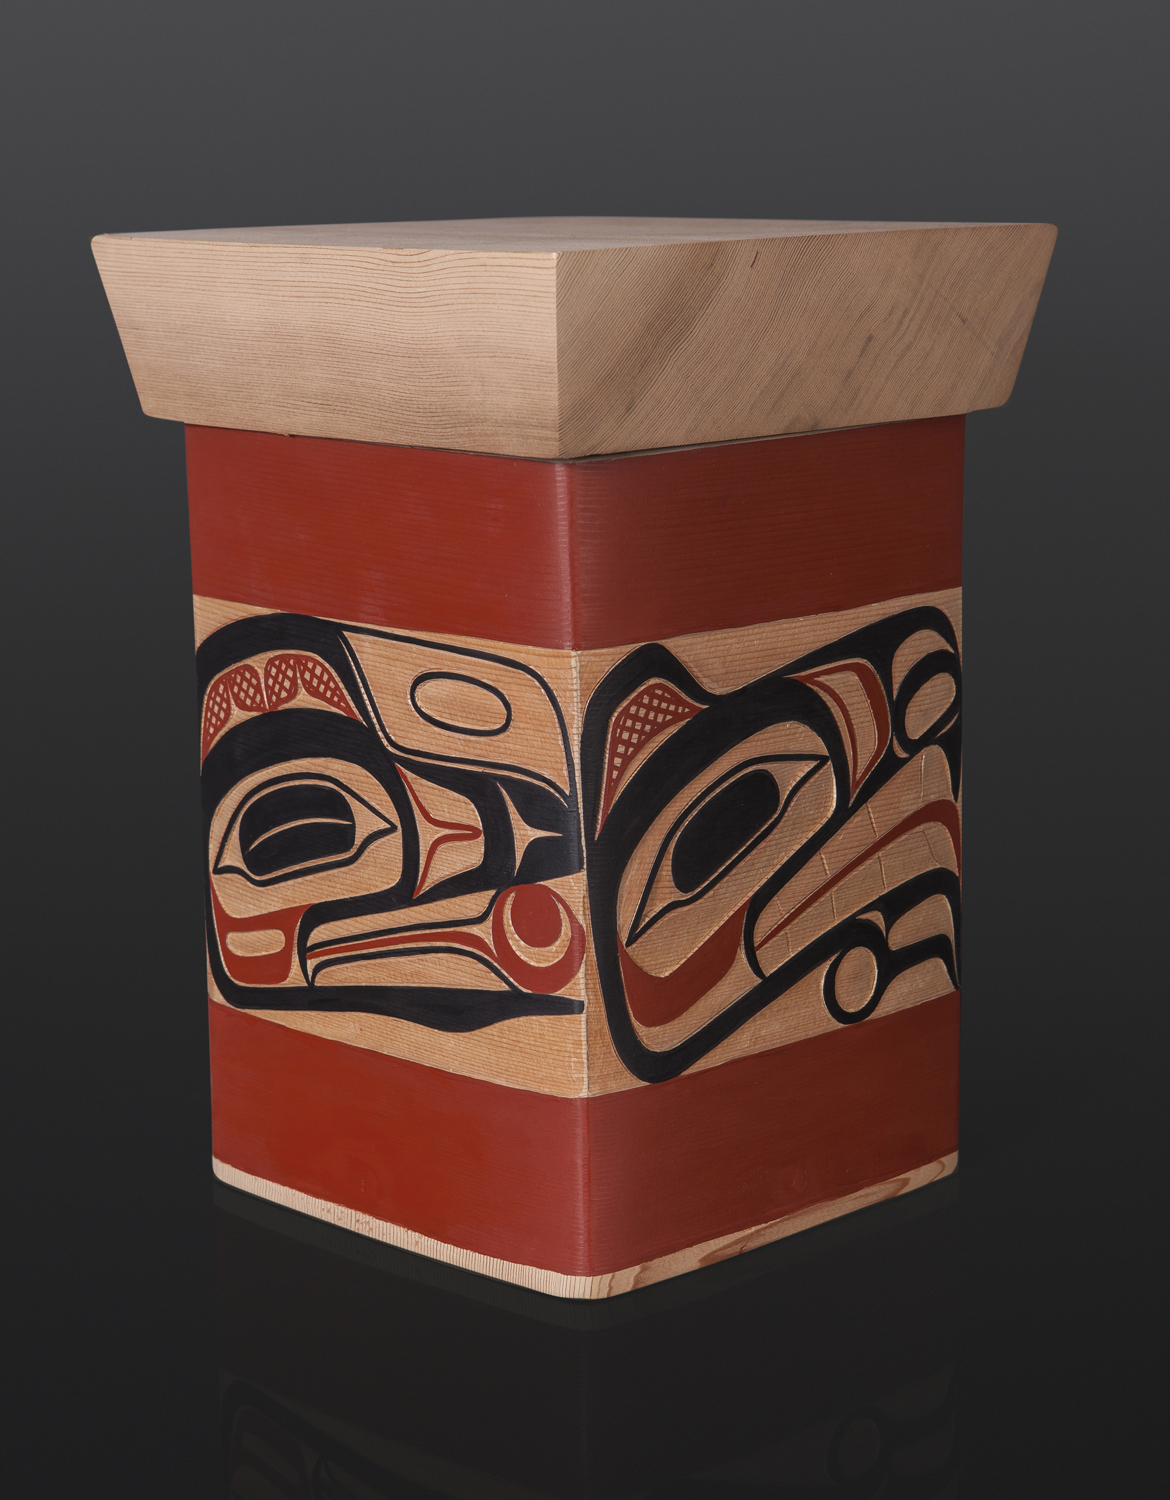 Four Clans Bentwood Box David Boxley Tsimshian red cedar, paint 8.25" x 8" x 11.25" 2400 sculpture wood carved northwest coast native art